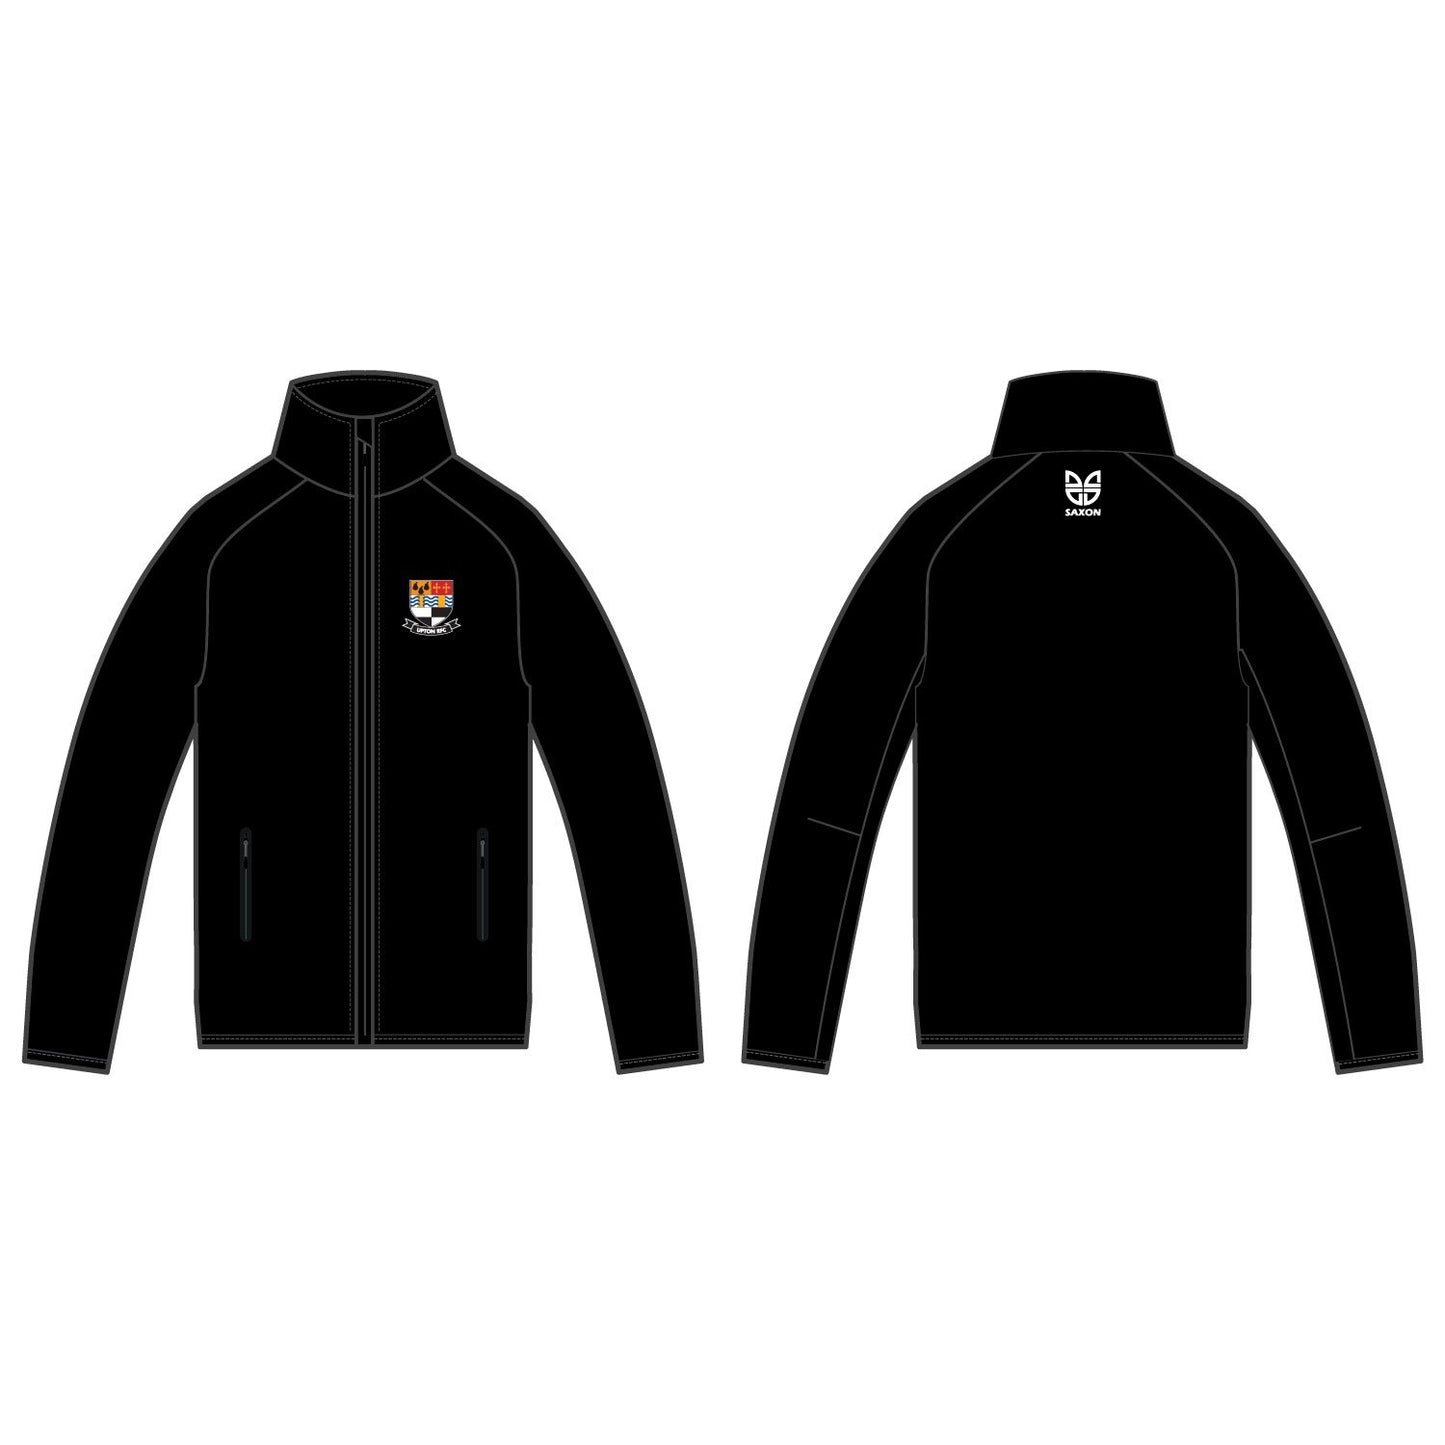 Upton RFC Softshell Jacket